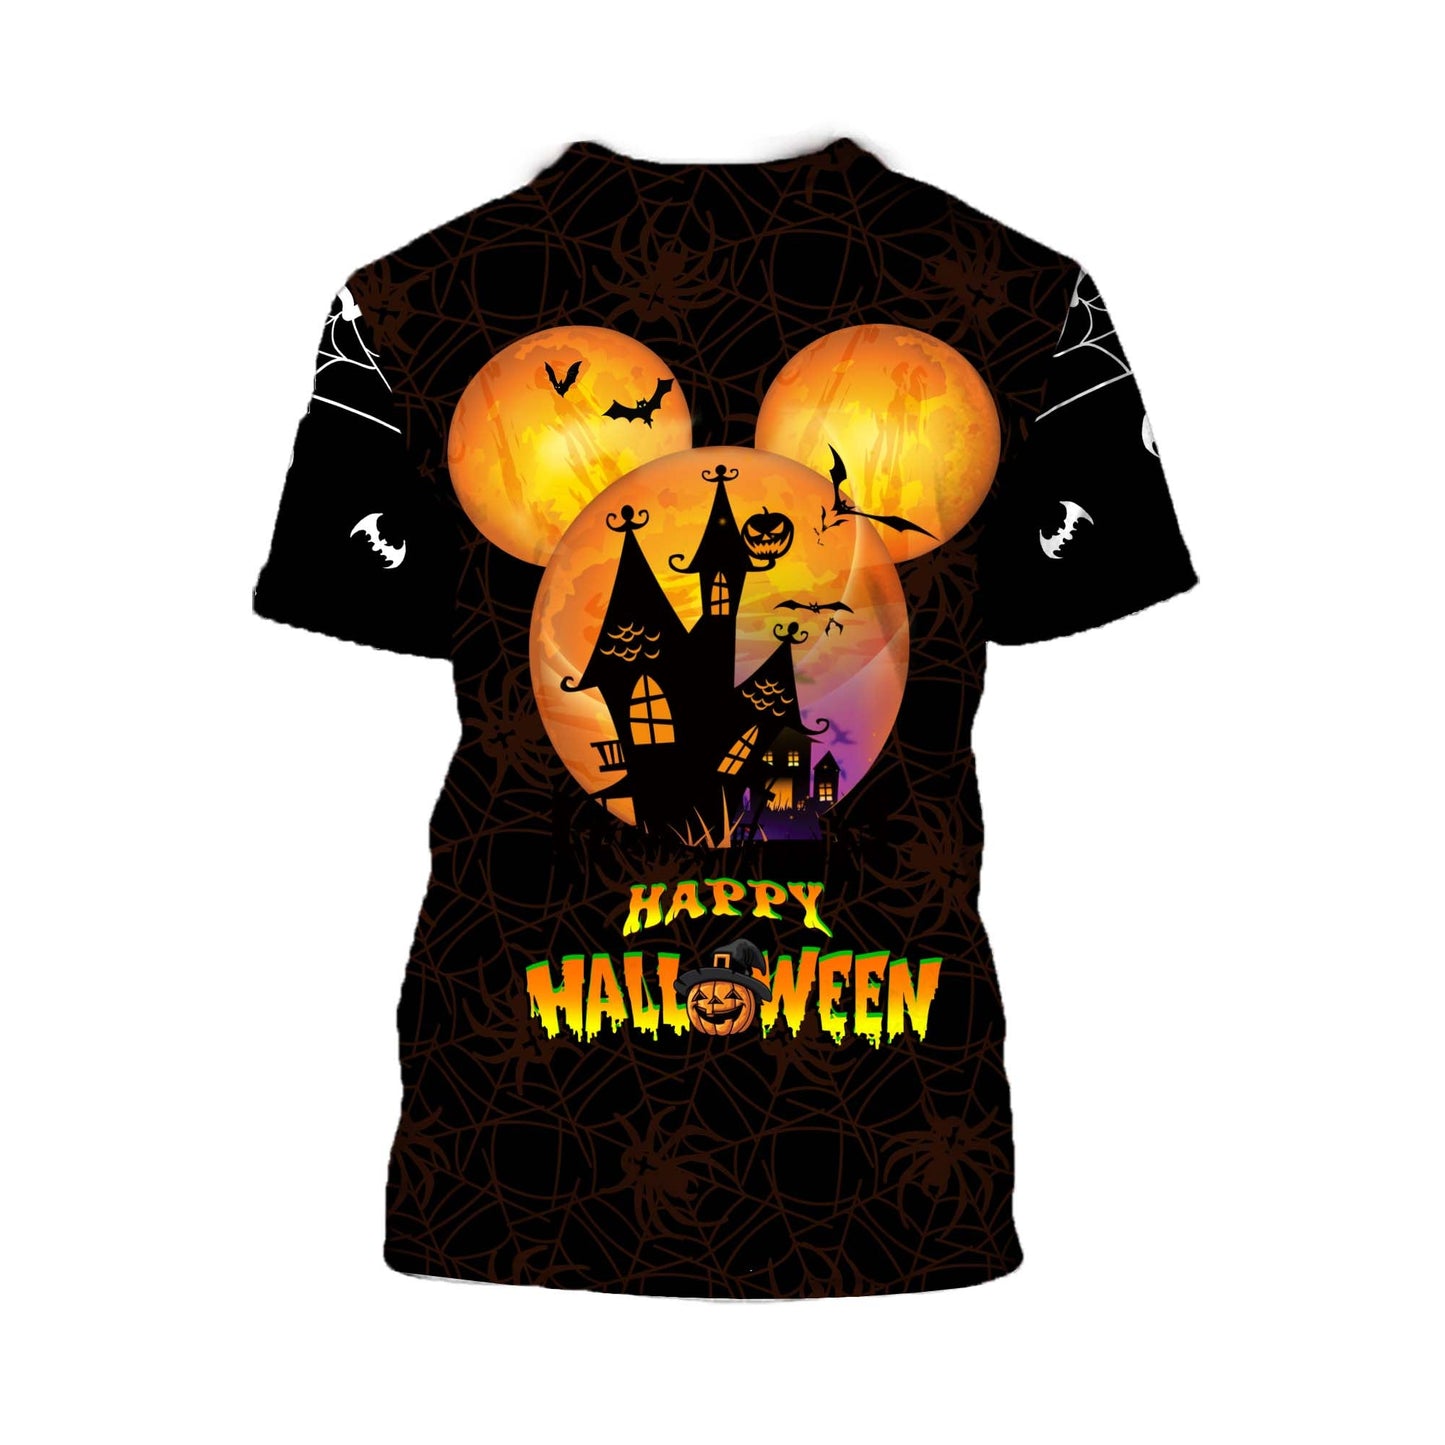 DN Halloween Shirt MN And MK Mouse In Halloween Night Happy Halloween Black T-shirt